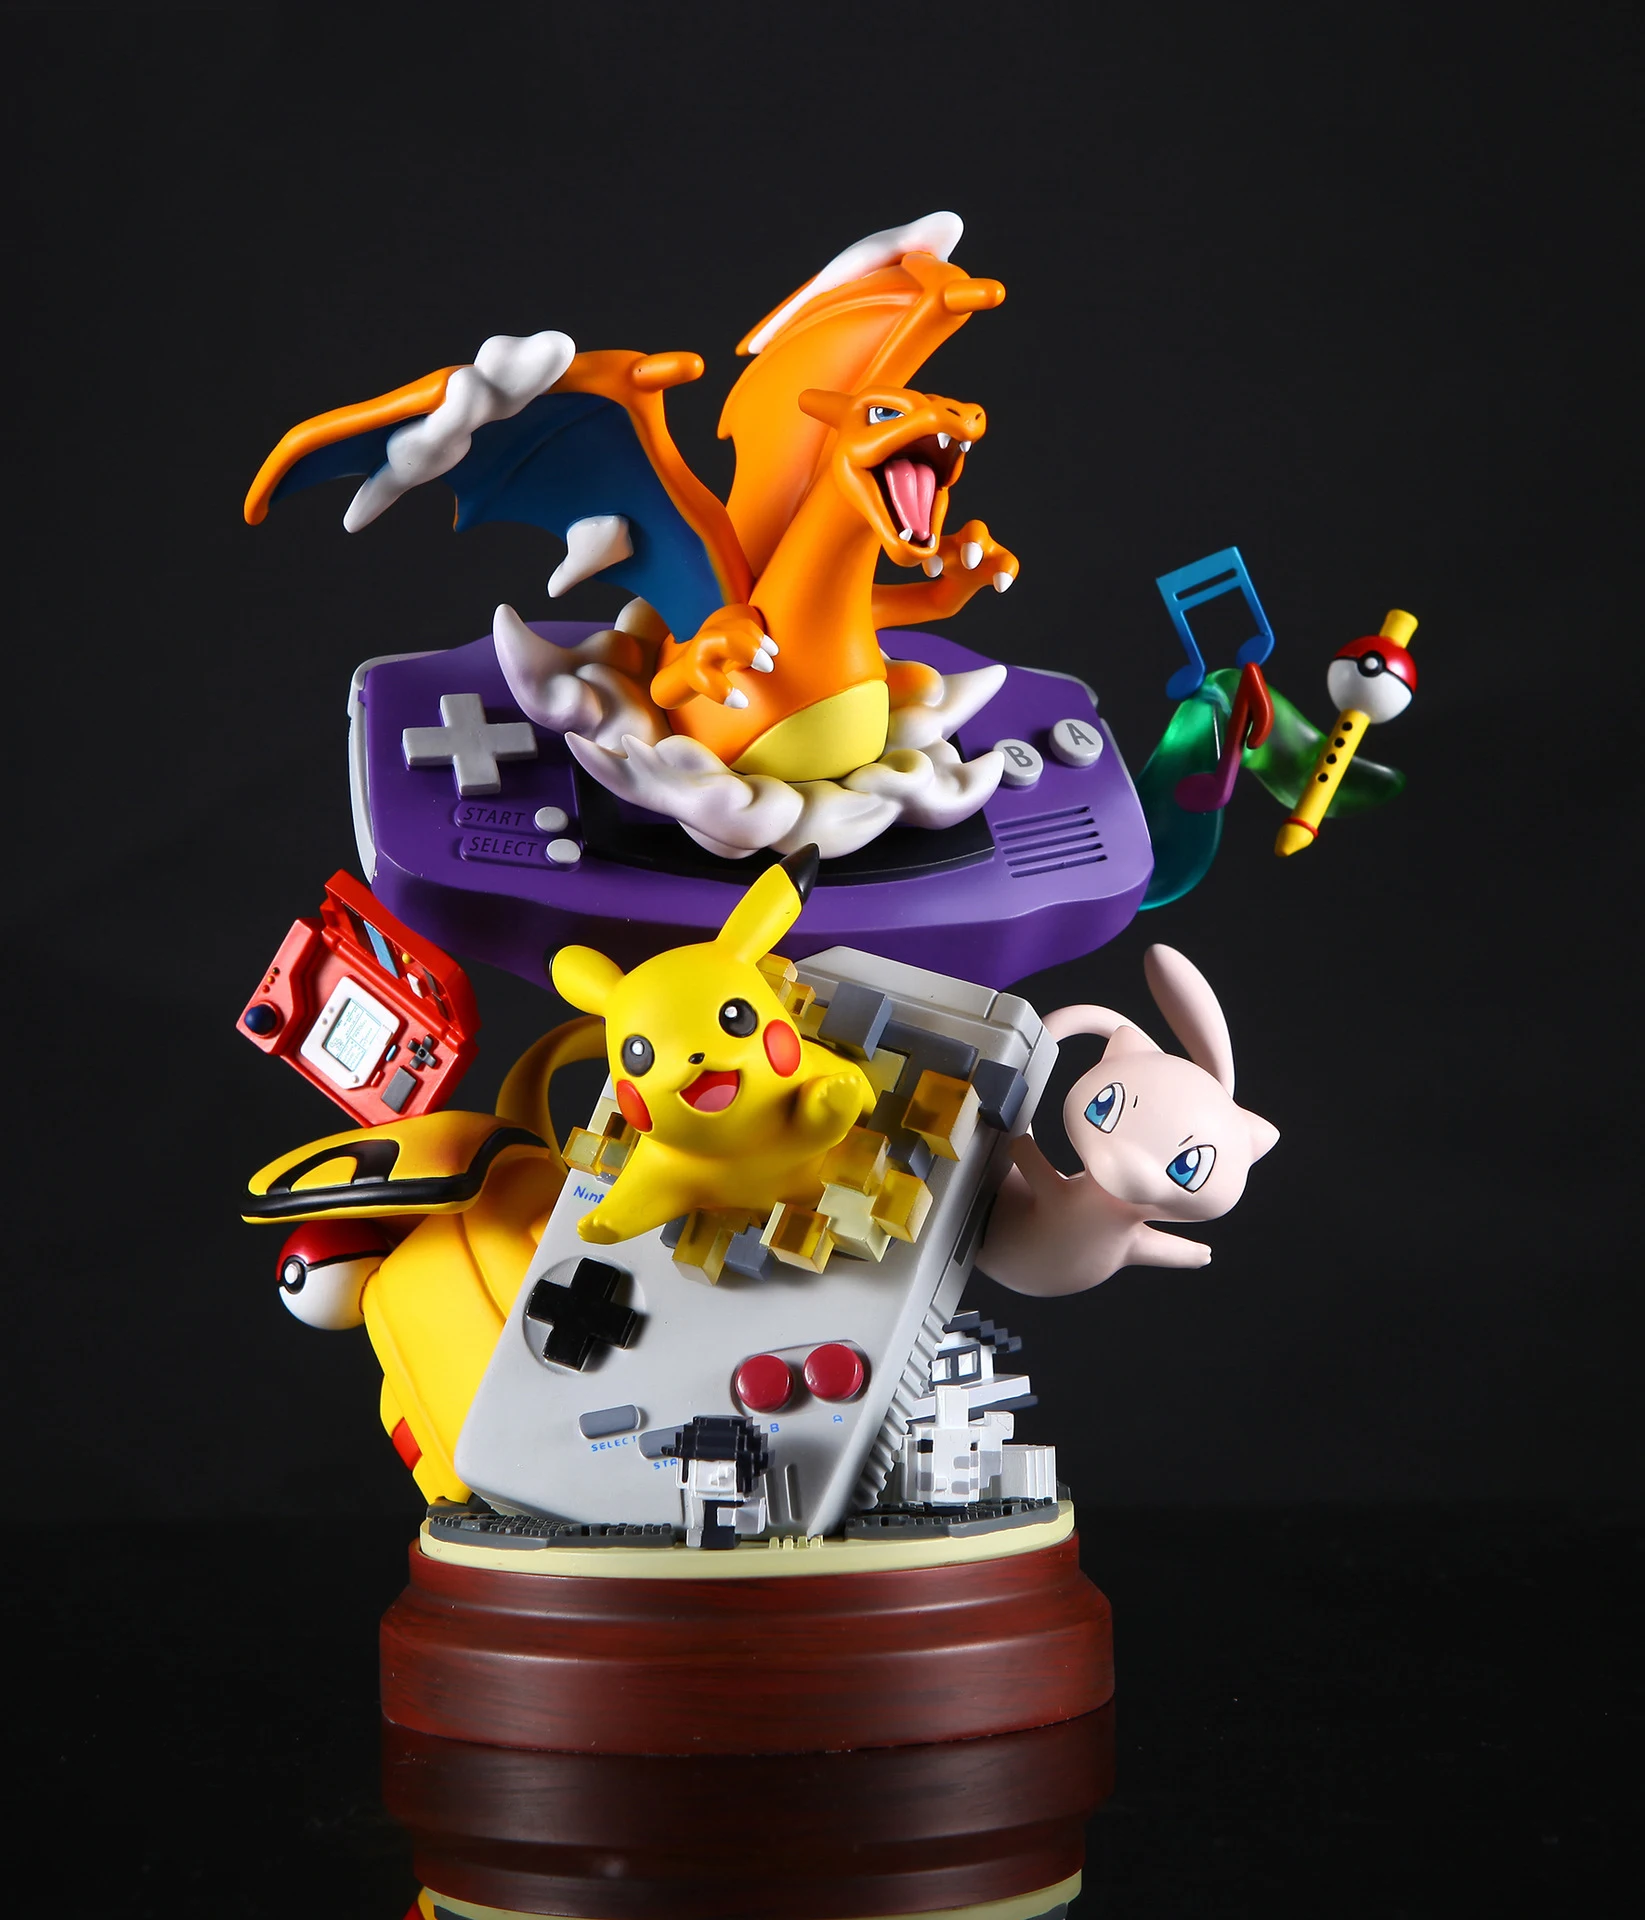 Аниме Pikachu Charmander Mew фигурка GK модель игра машина украшения игрушки